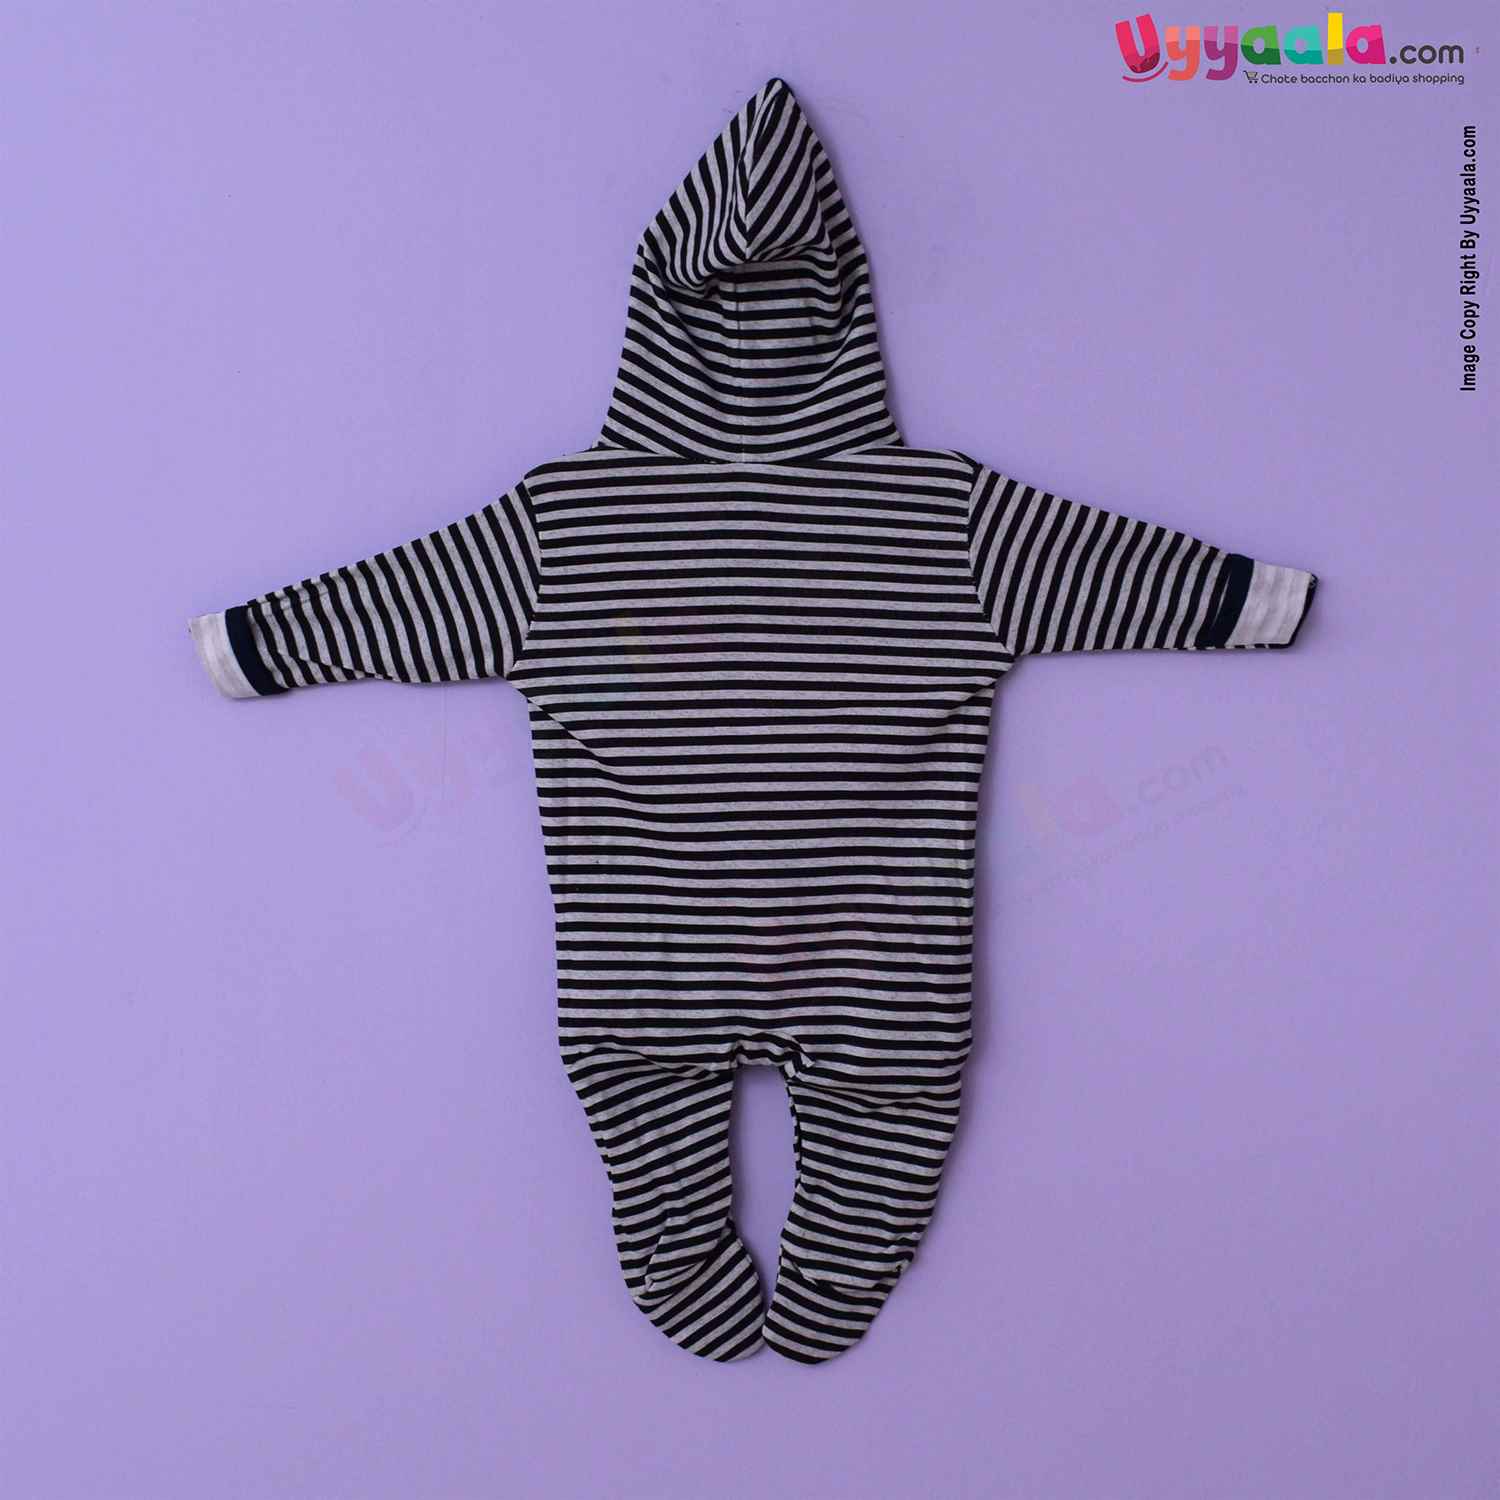 MAGIC TOWN Hooded Sleep Suits For Newborn Babies, 2Pcs - Stripes & Star Print, Black & Grey